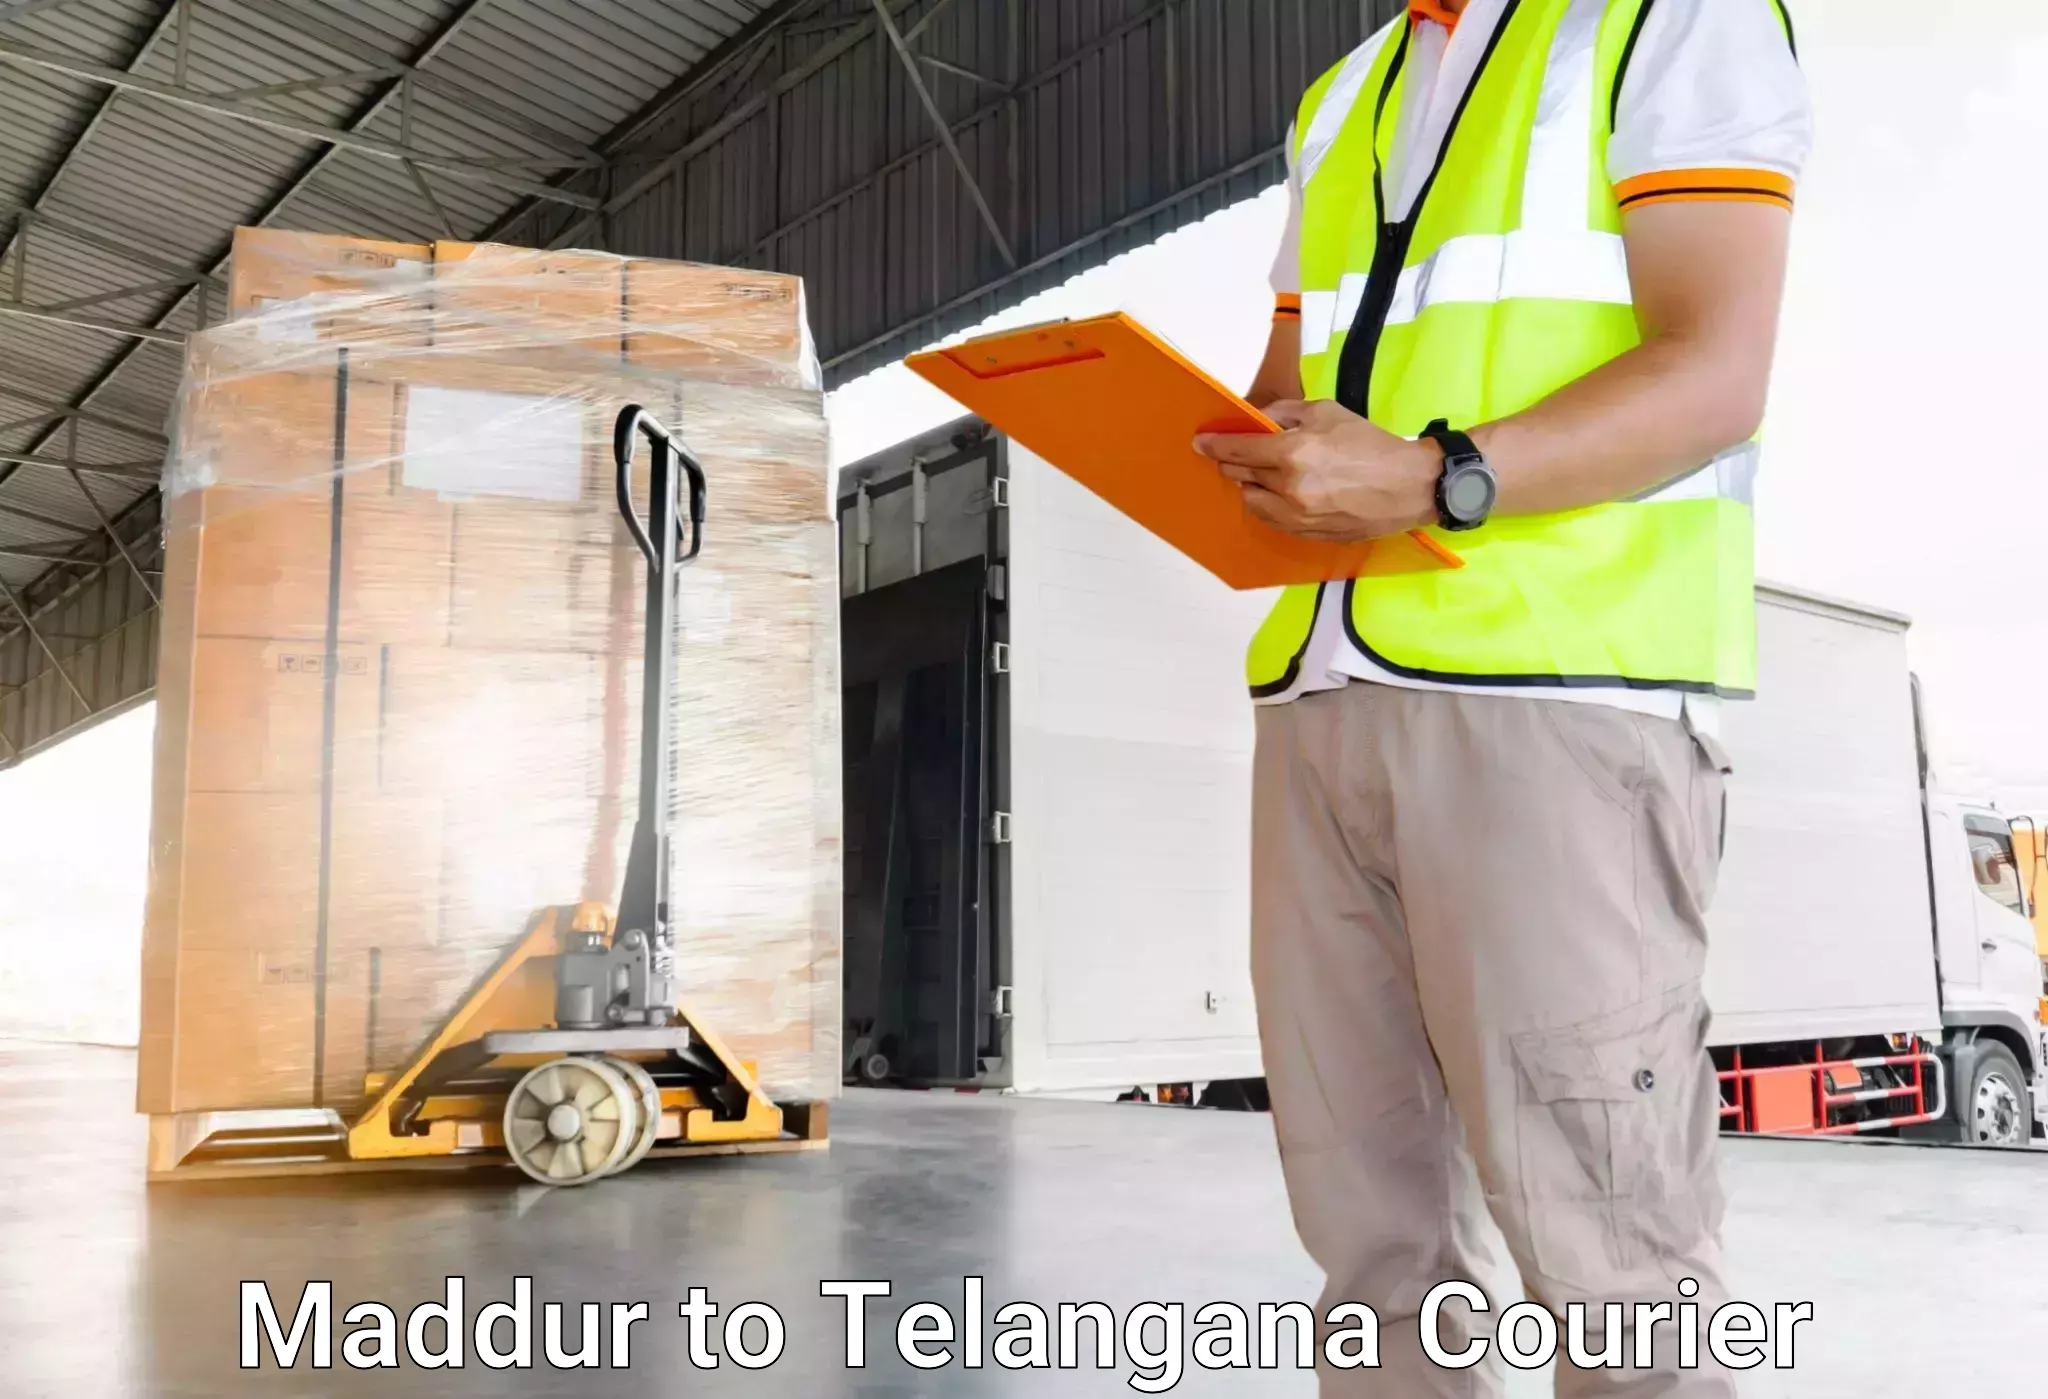 Baggage shipping experience in Maddur to Balanagar